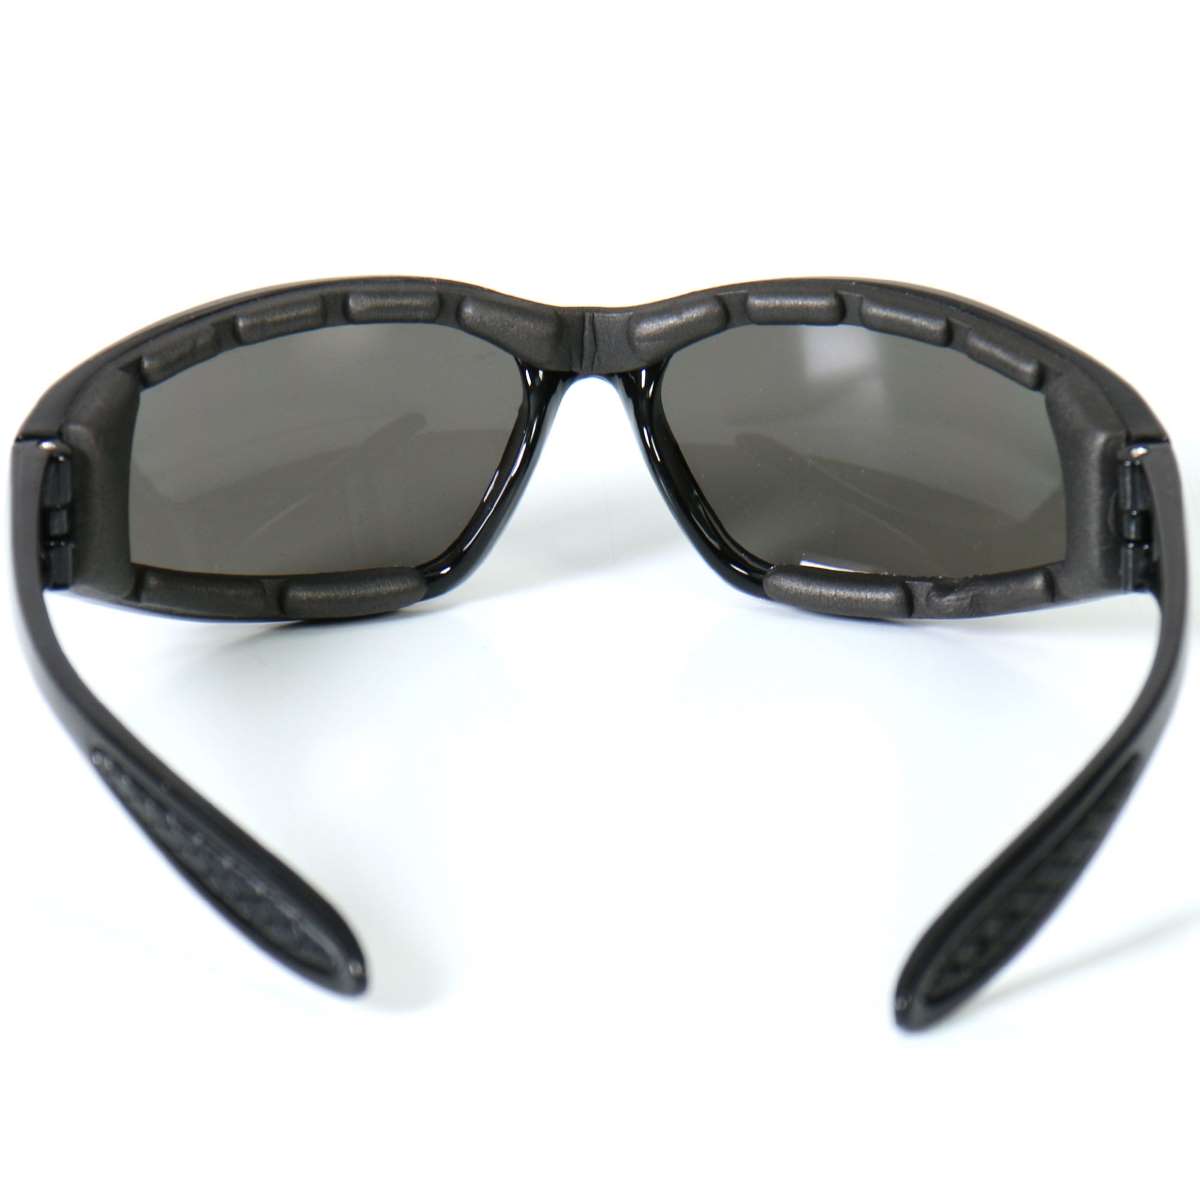 Hot Leathers Titan Sunglasses with Foam Padding SGF1045